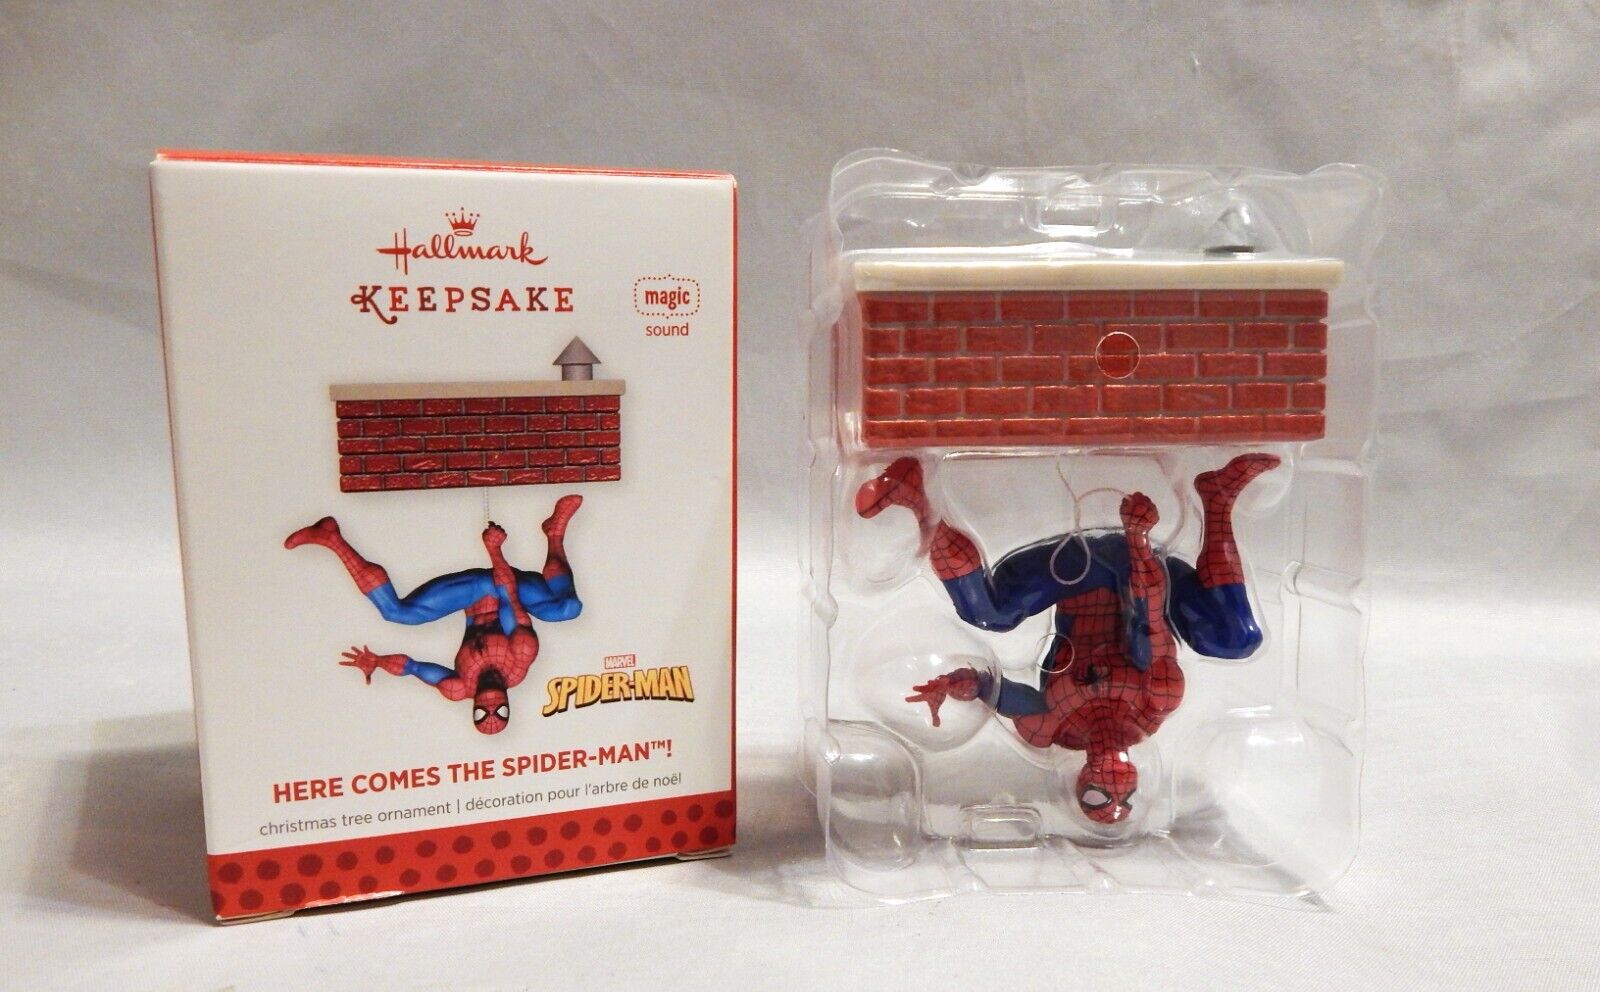 2013 Hallmark Keepsake Ornament Magic Sound Here Comes The Spider-Man